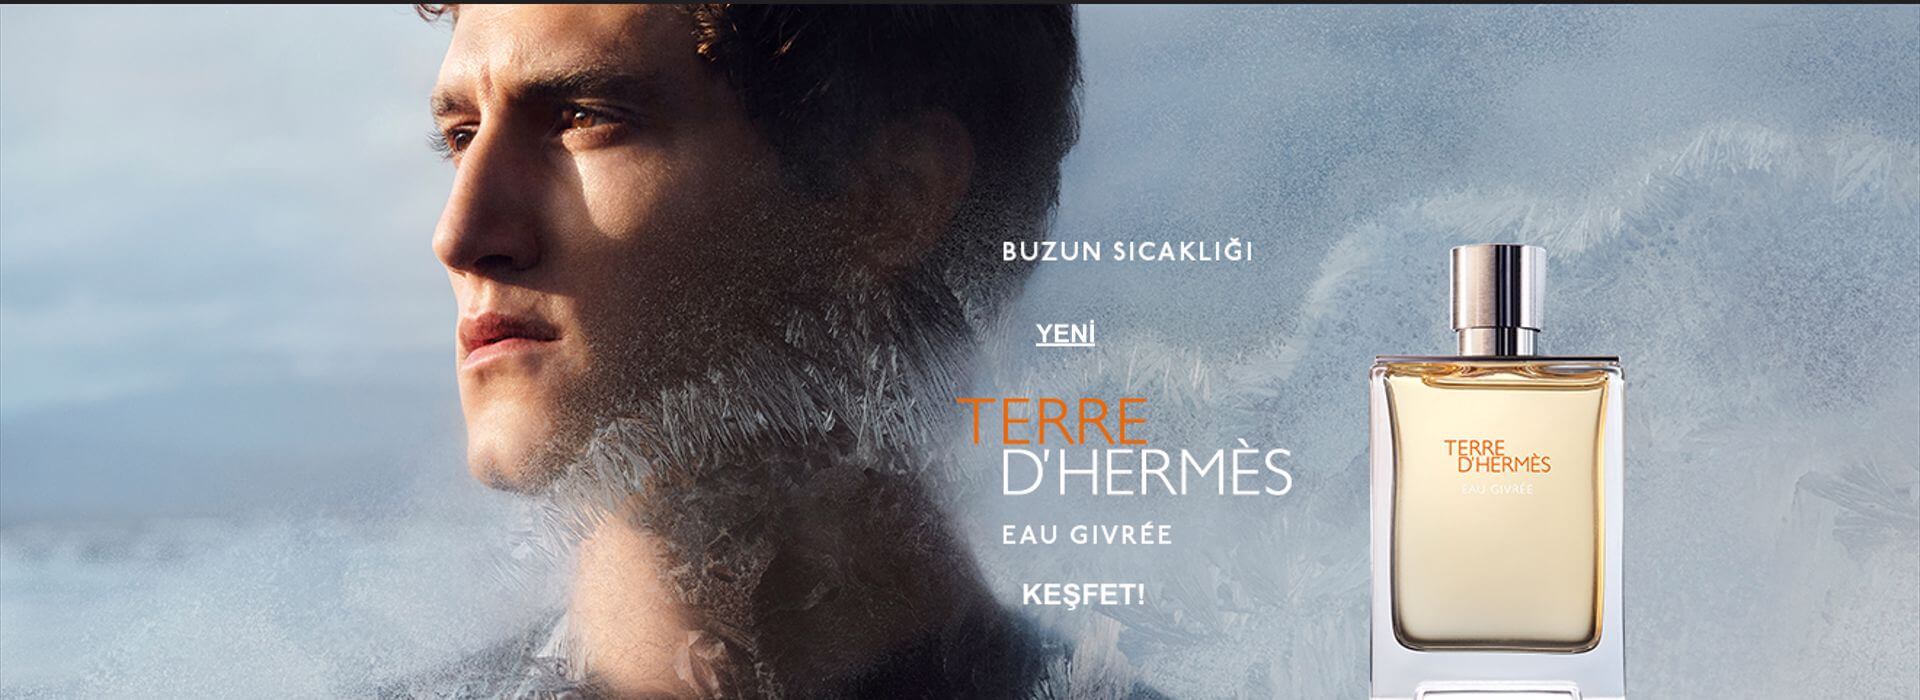 Hermes-Terre-D-hermes-Eau-Givree_1920x700.jpeg (152 KB)